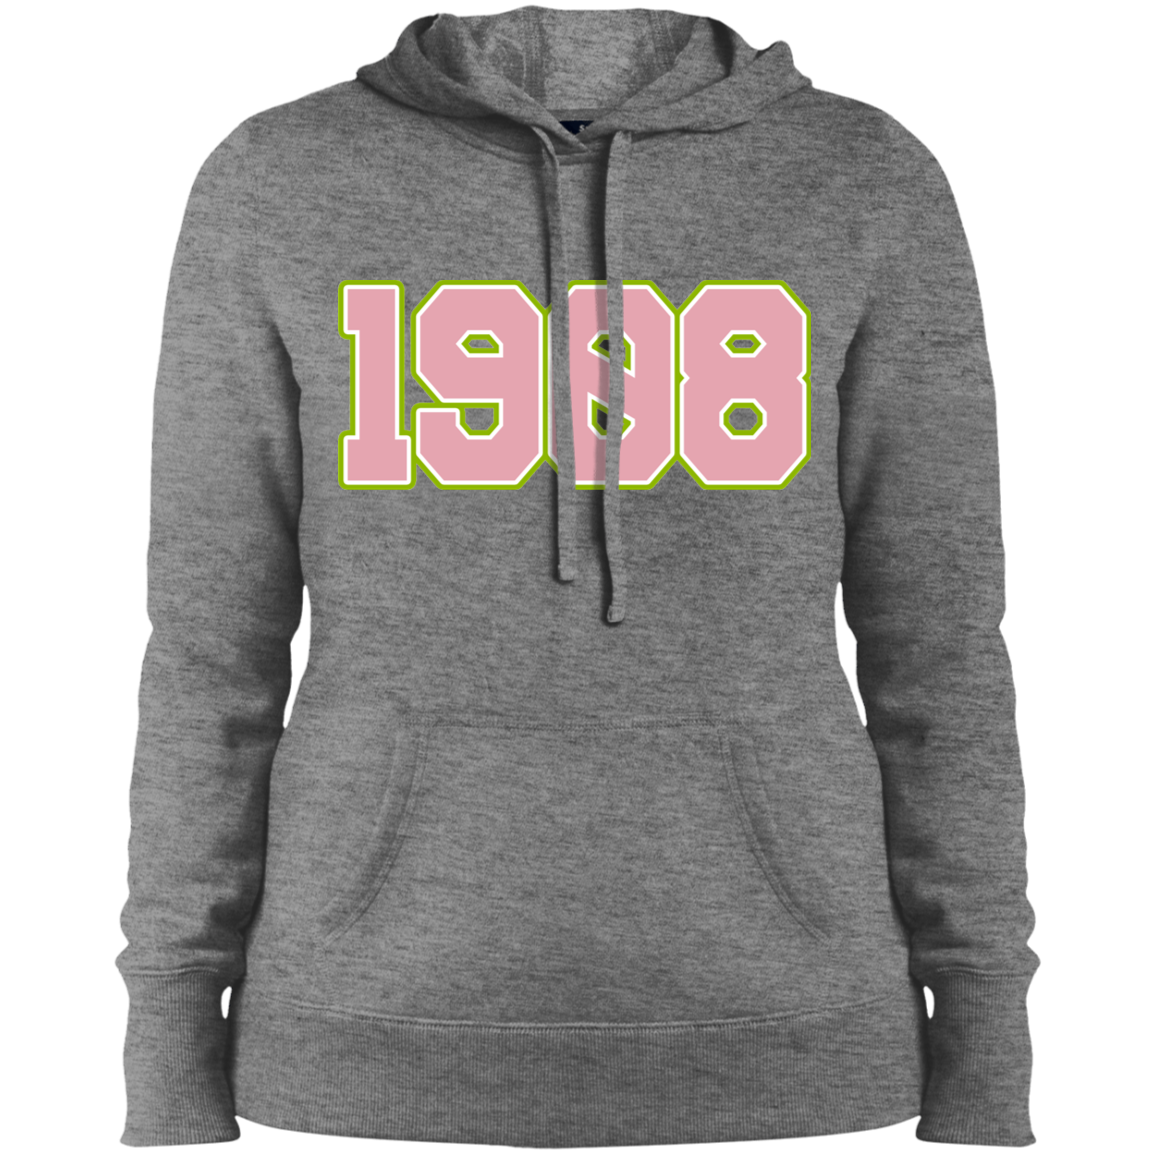 Greek Year 1908 Hooded Sweatshirt